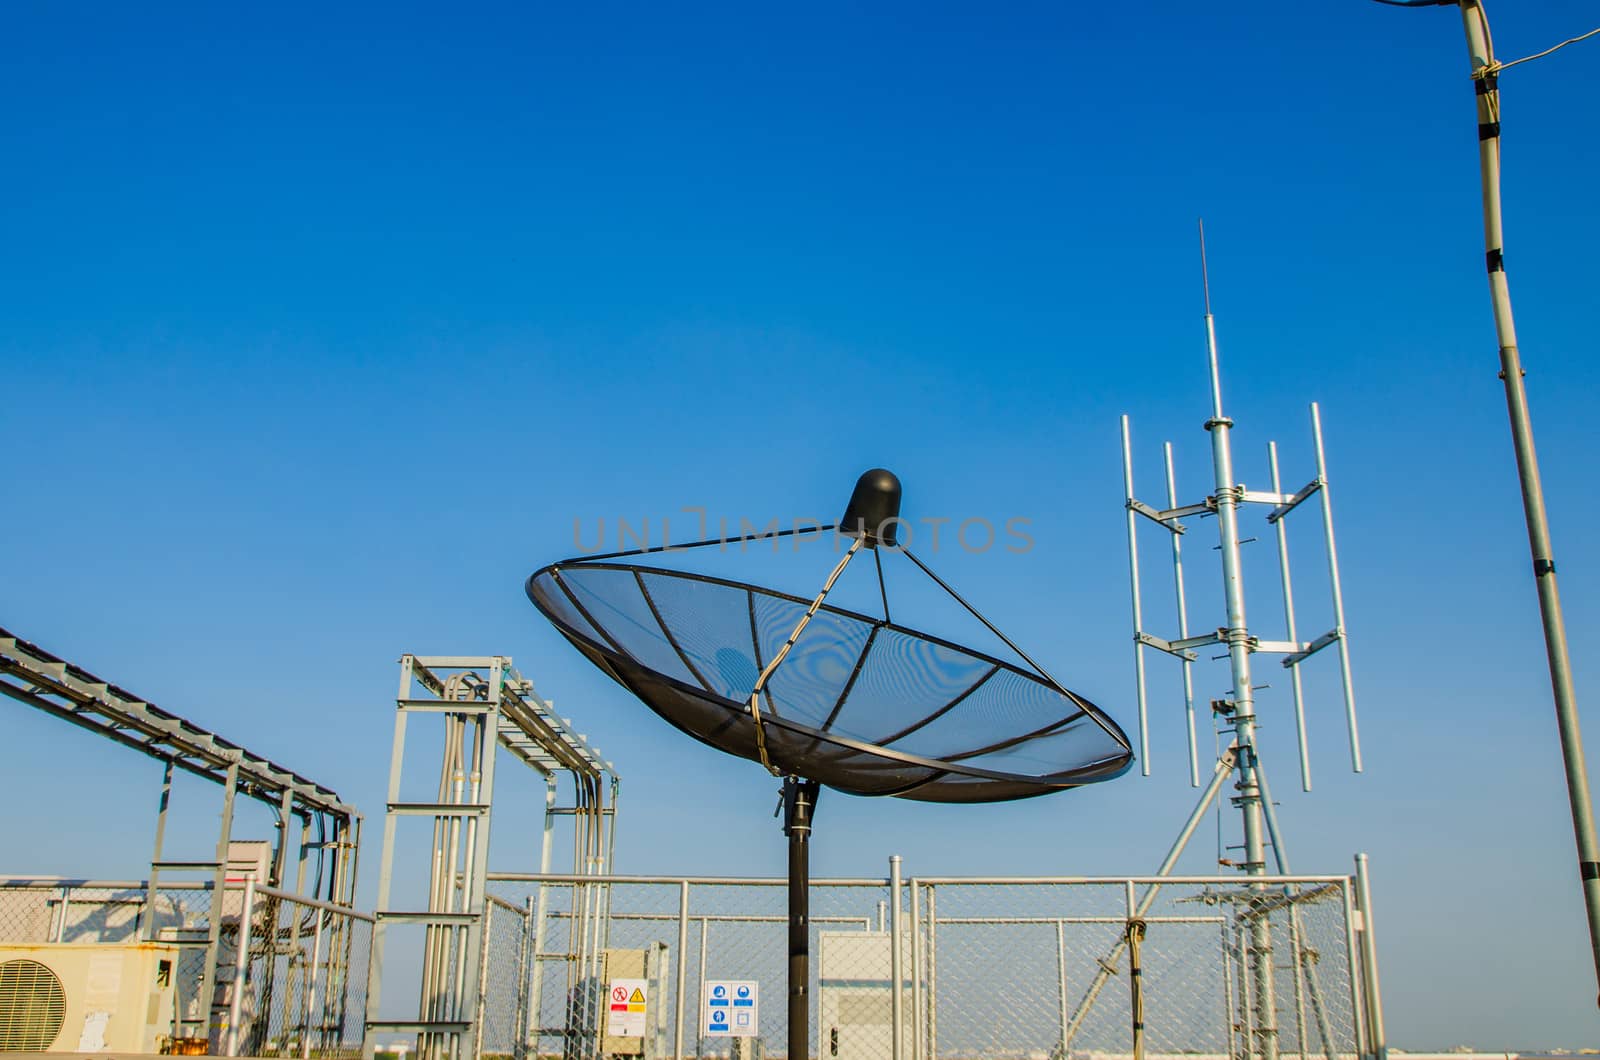 Sattelite disk antenna, broadcast comunication